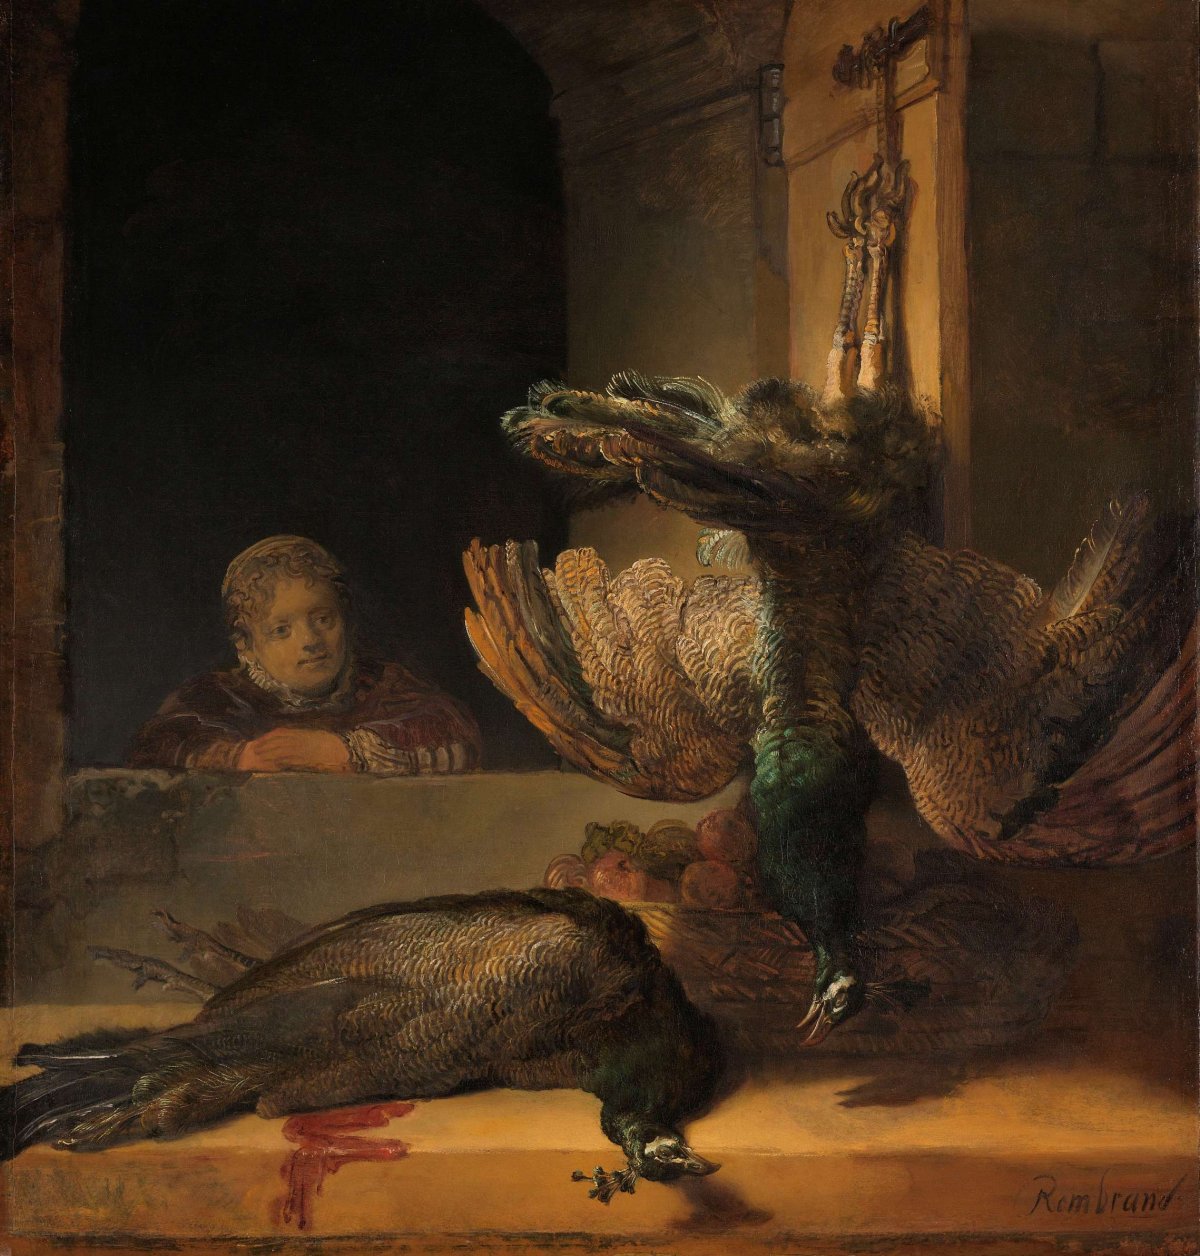 Still Life with Peacocks, Rembrandt van Rijn, c. 1639